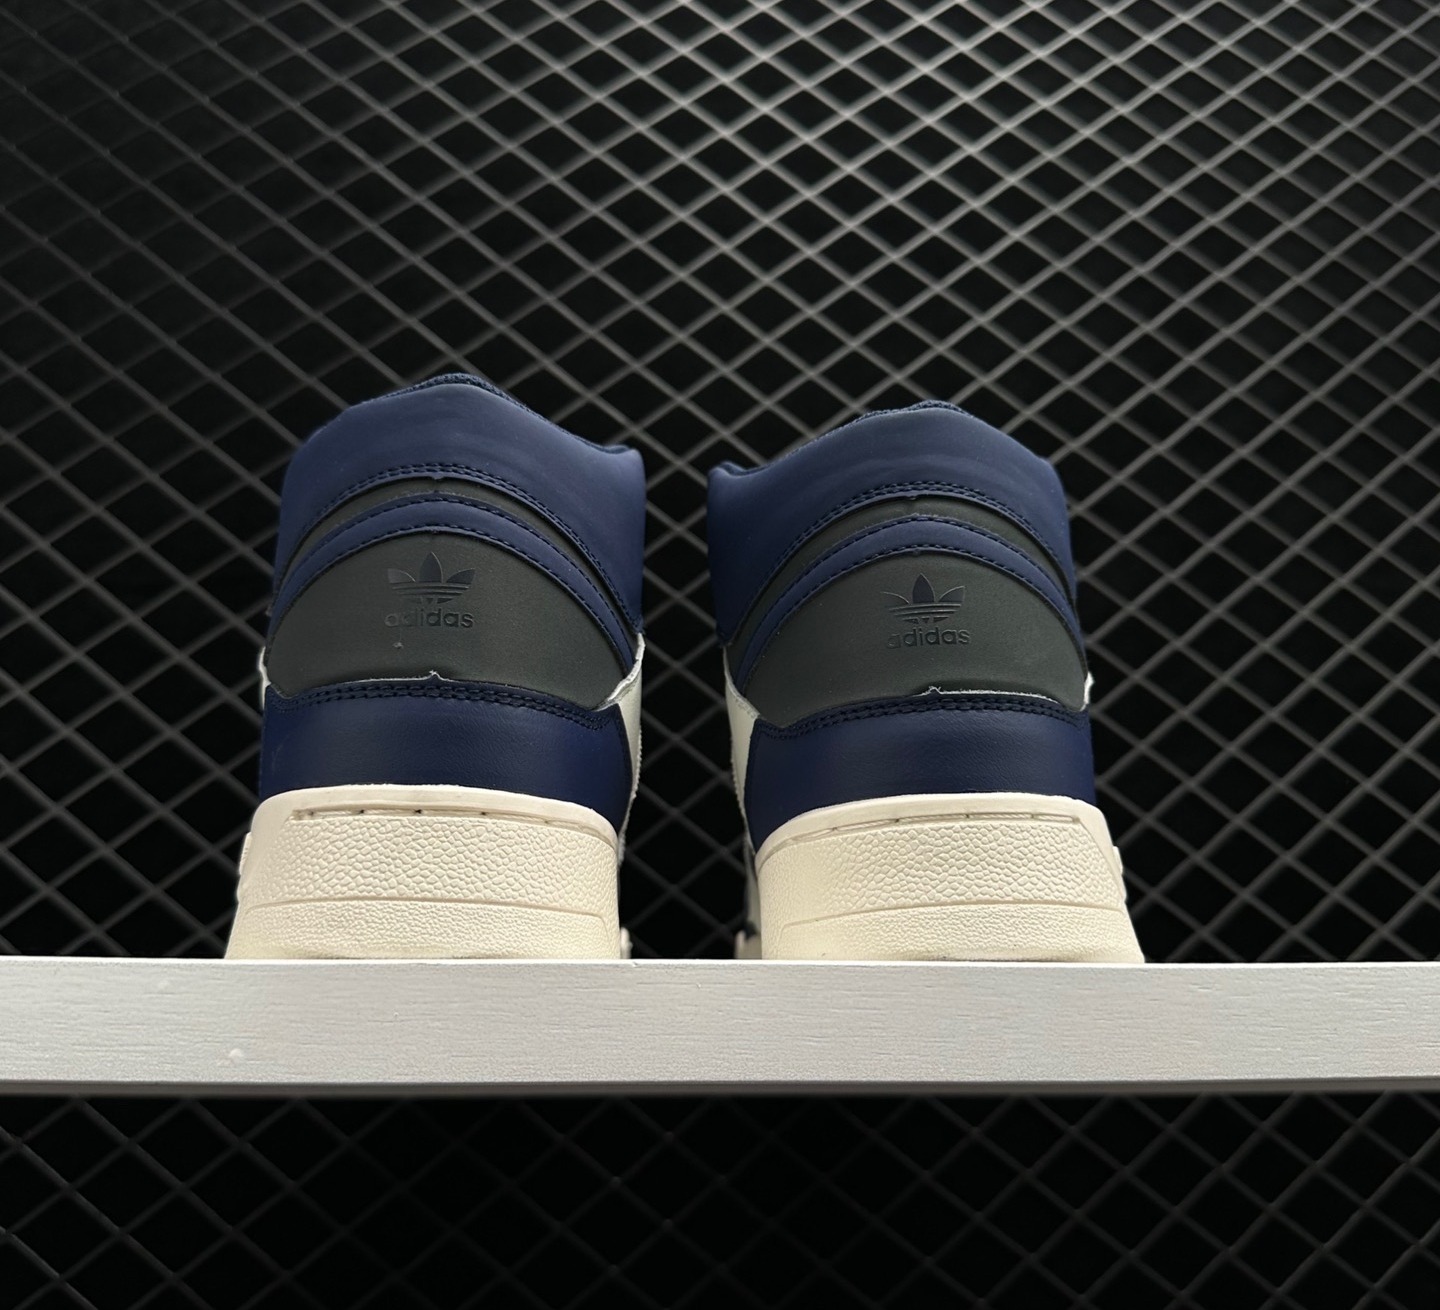 Adidas Originals Drop Step XL 'White Navy' HQ6946 - Stylish and Versatile Footwear